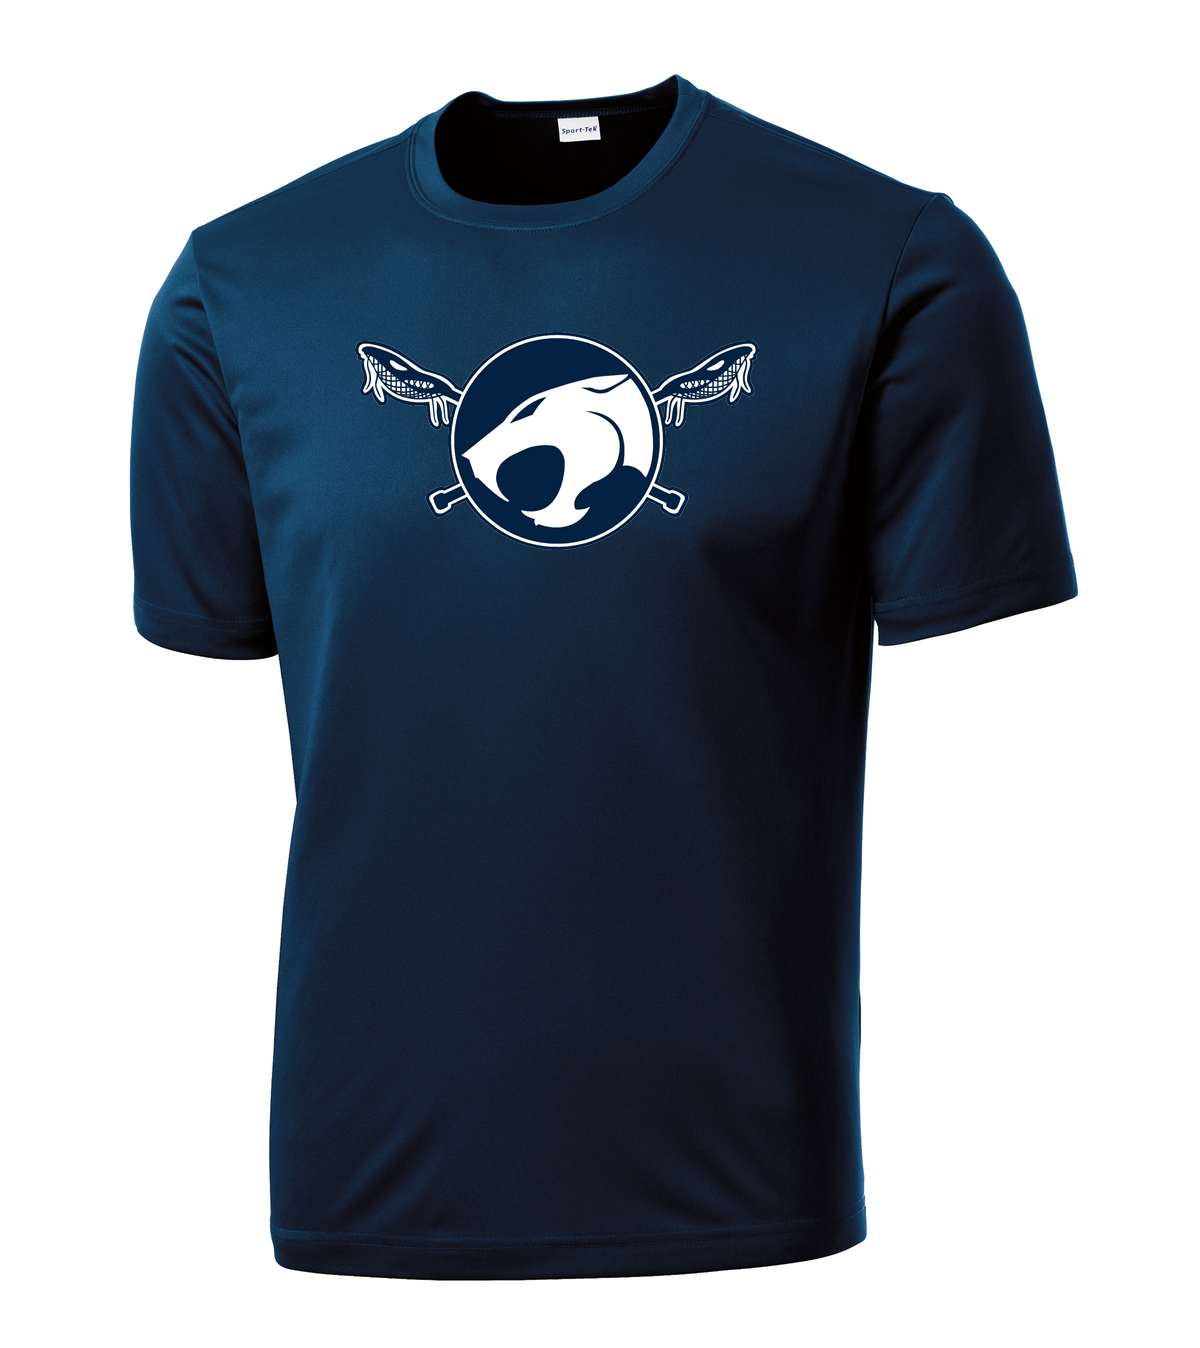 Reitz Lacrosse Navy Performance T-Shirt